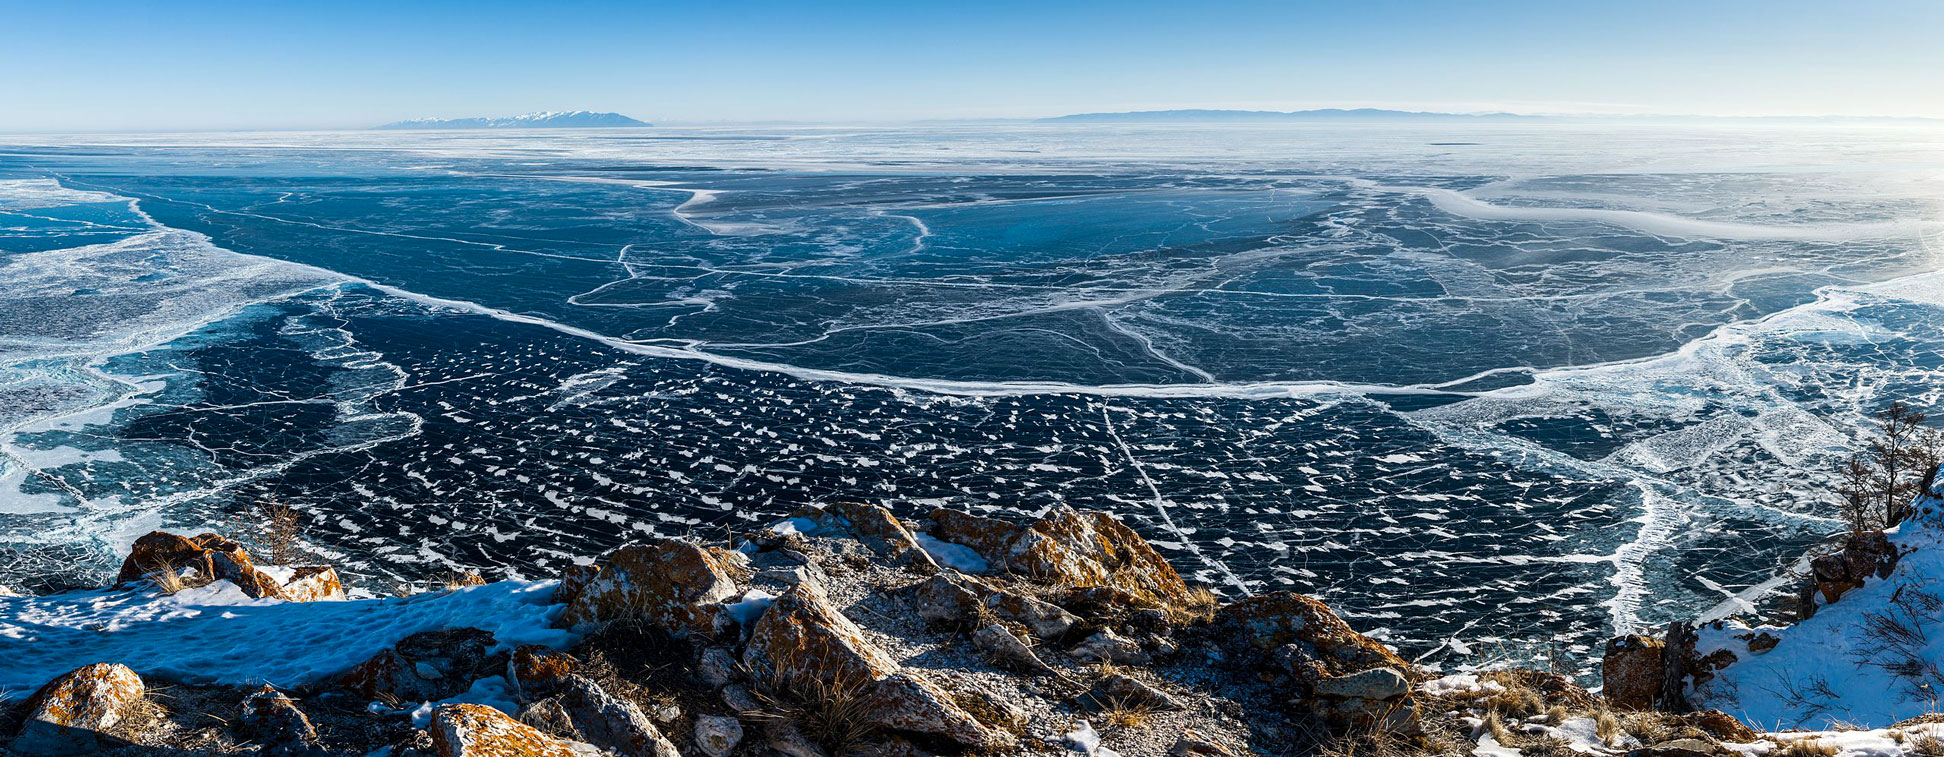 Panorama of Lake Baikal in southern Siberia, Russia.